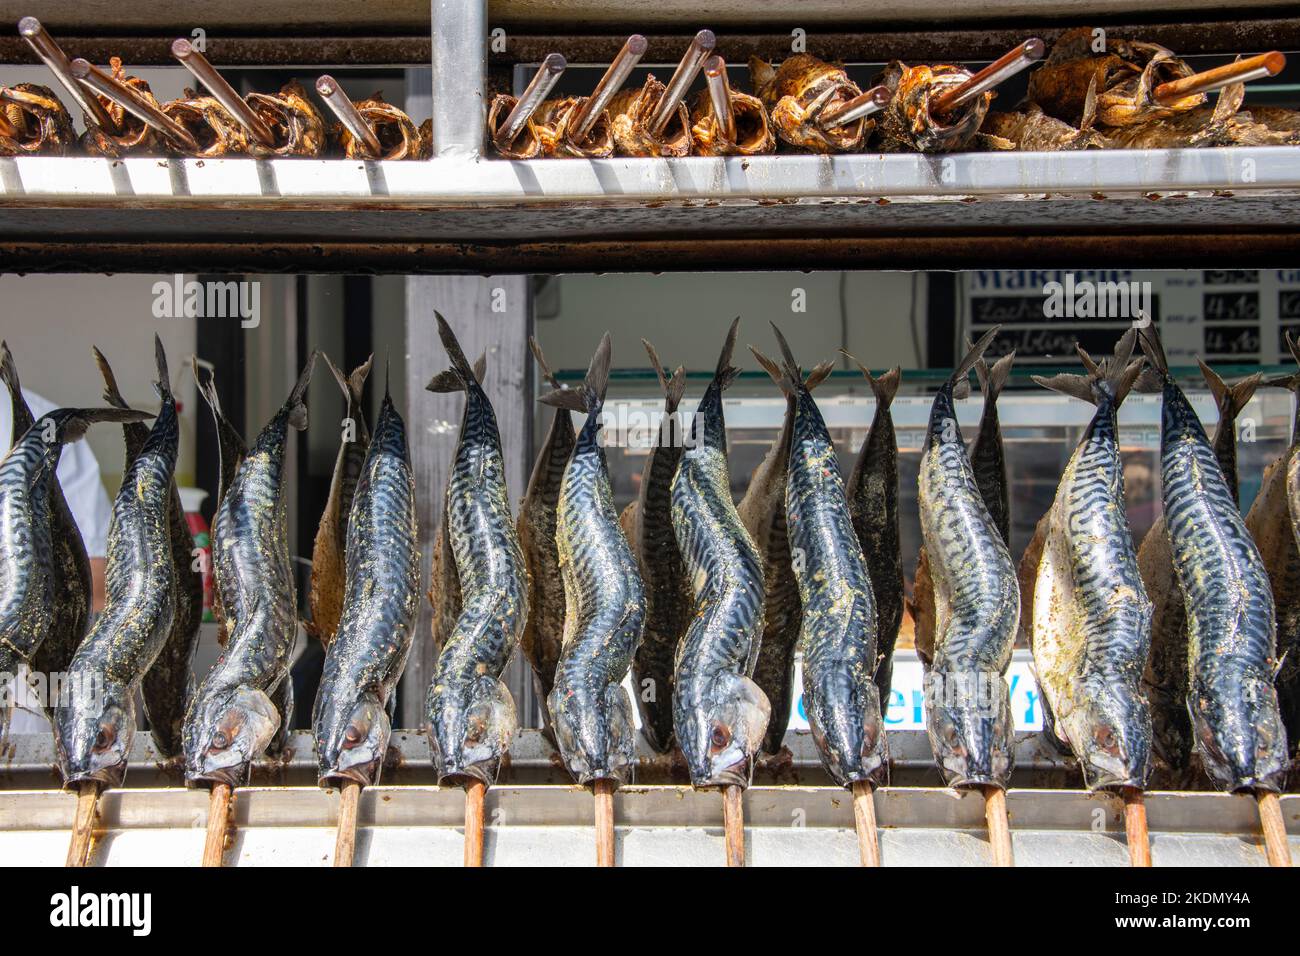 Preparazione di sgombri affumicati freschi in un ristorante di pesce da servire Foto Stock